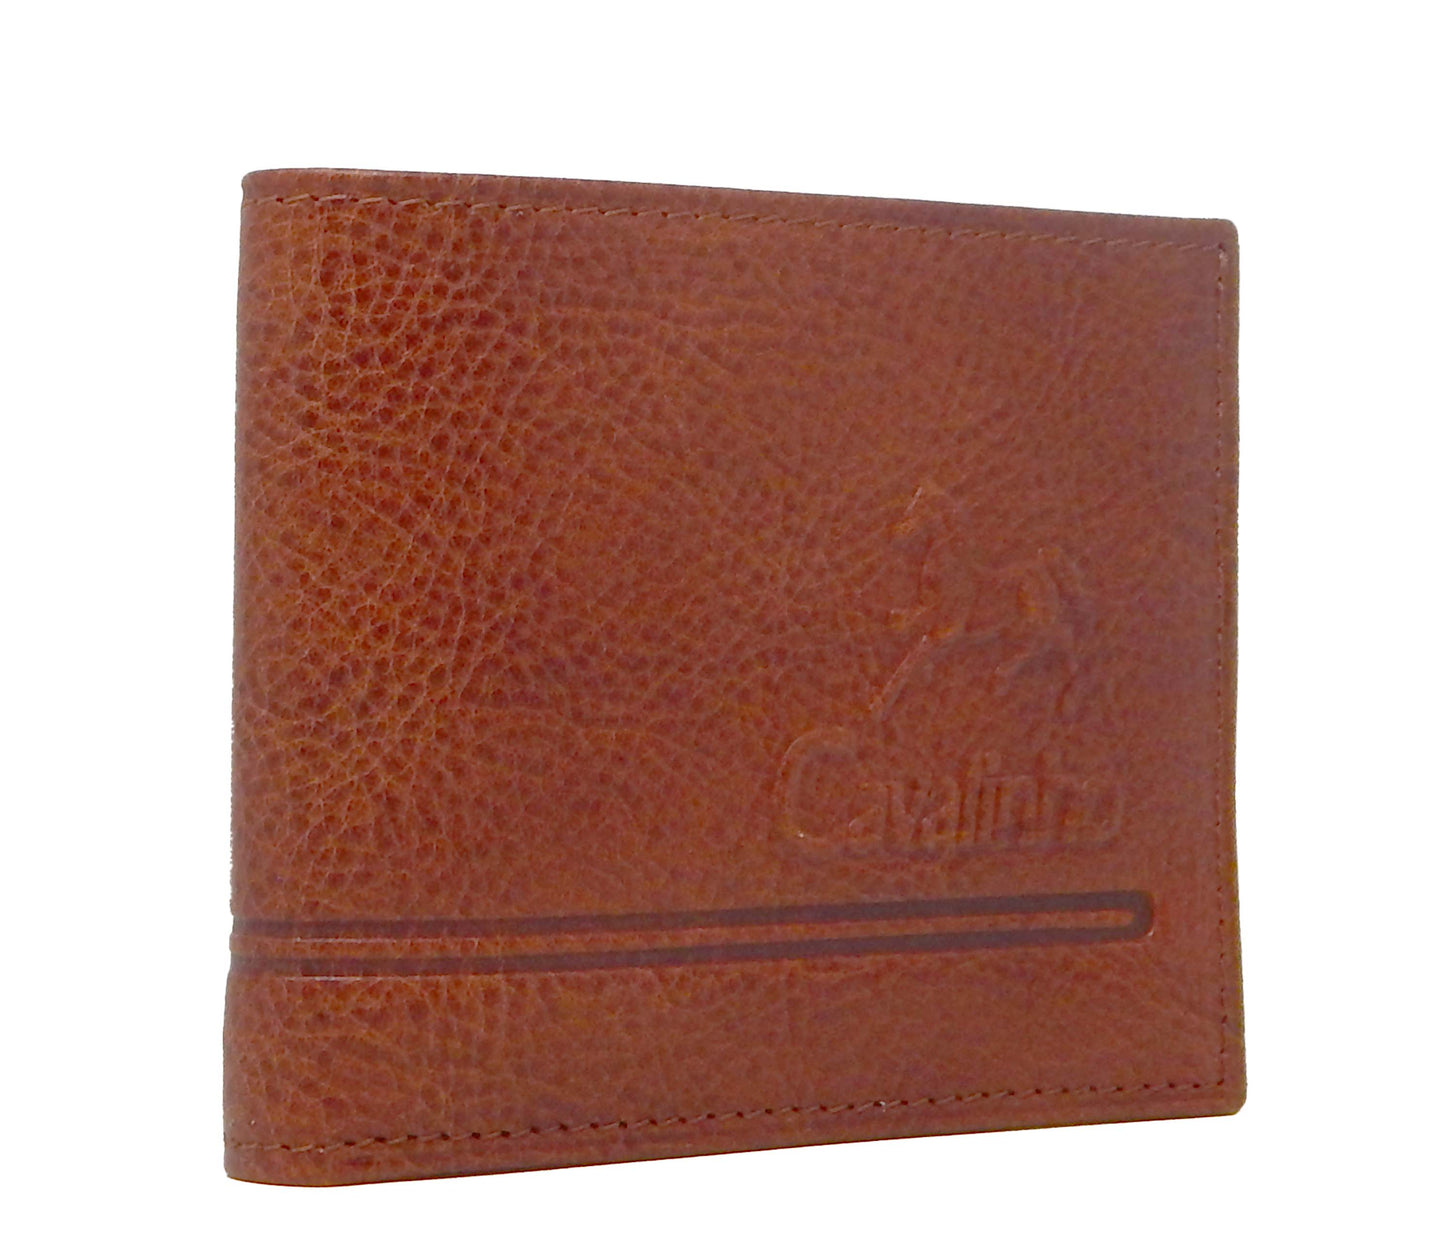 Cavalinho Men's 2 in 1 Bifold Leather Wallet - SaddleBrown - 28160528.13.99_2